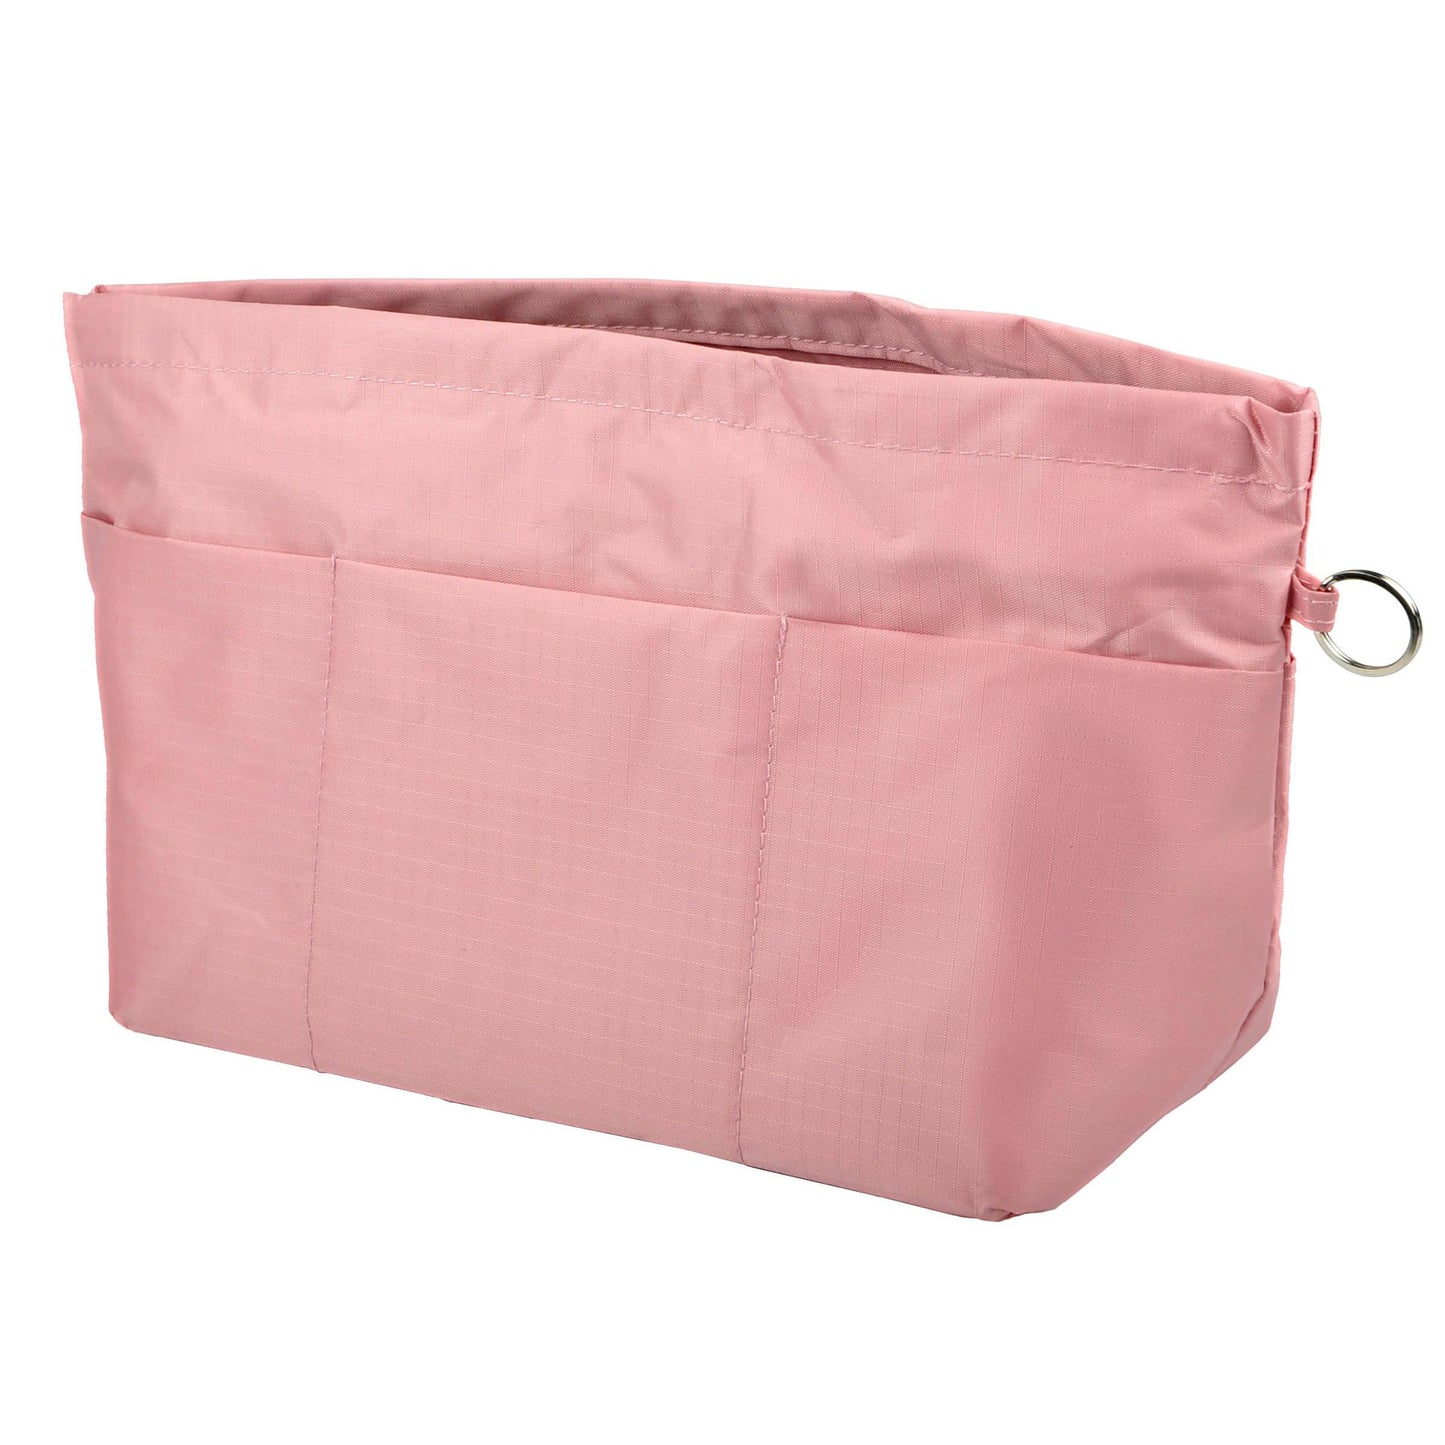 bag organizer insert with zipper